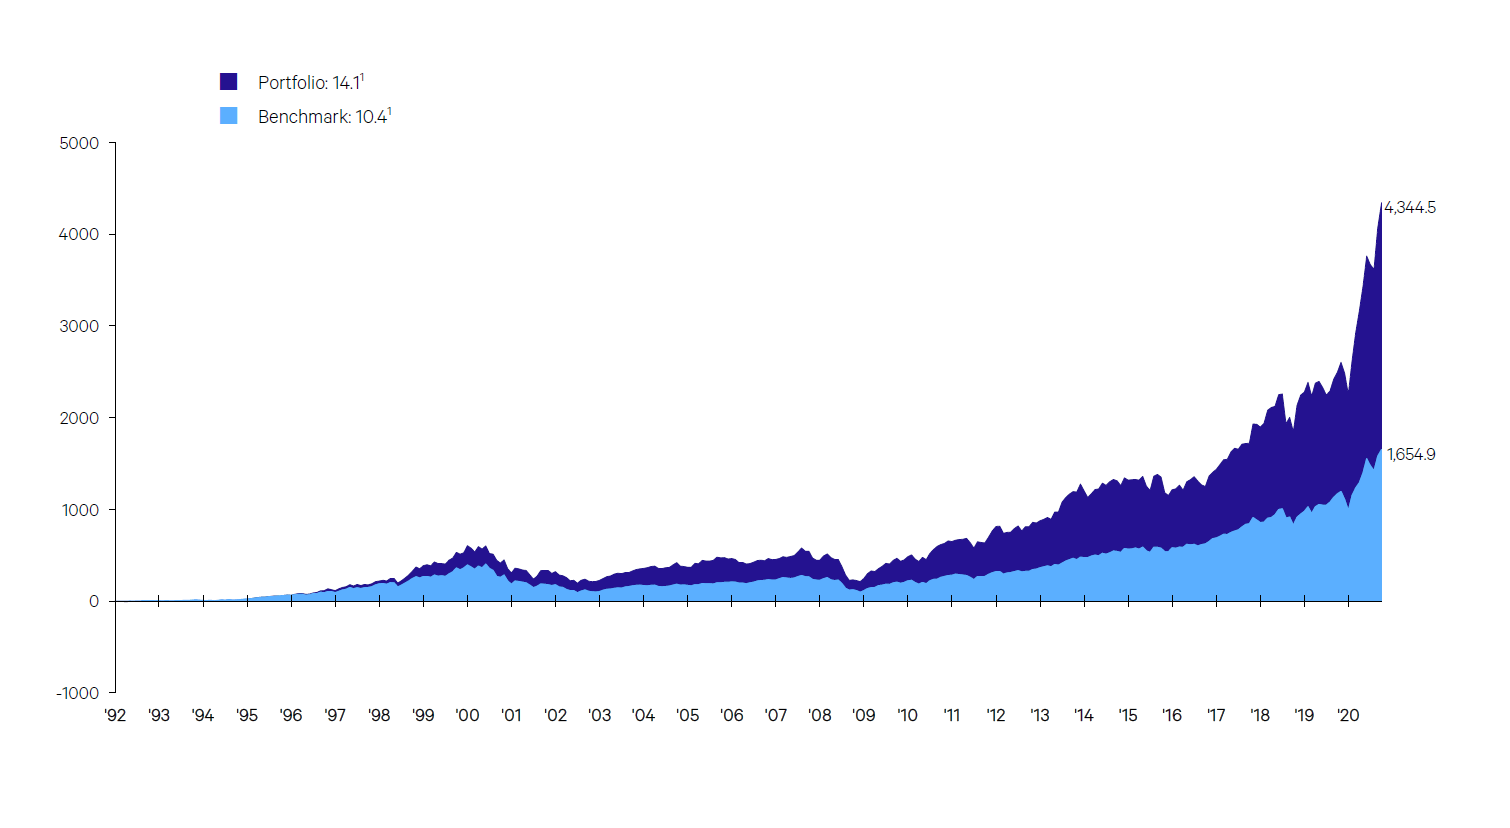 portfolio 14.1 benchmark 10.4 blue navy blue graph